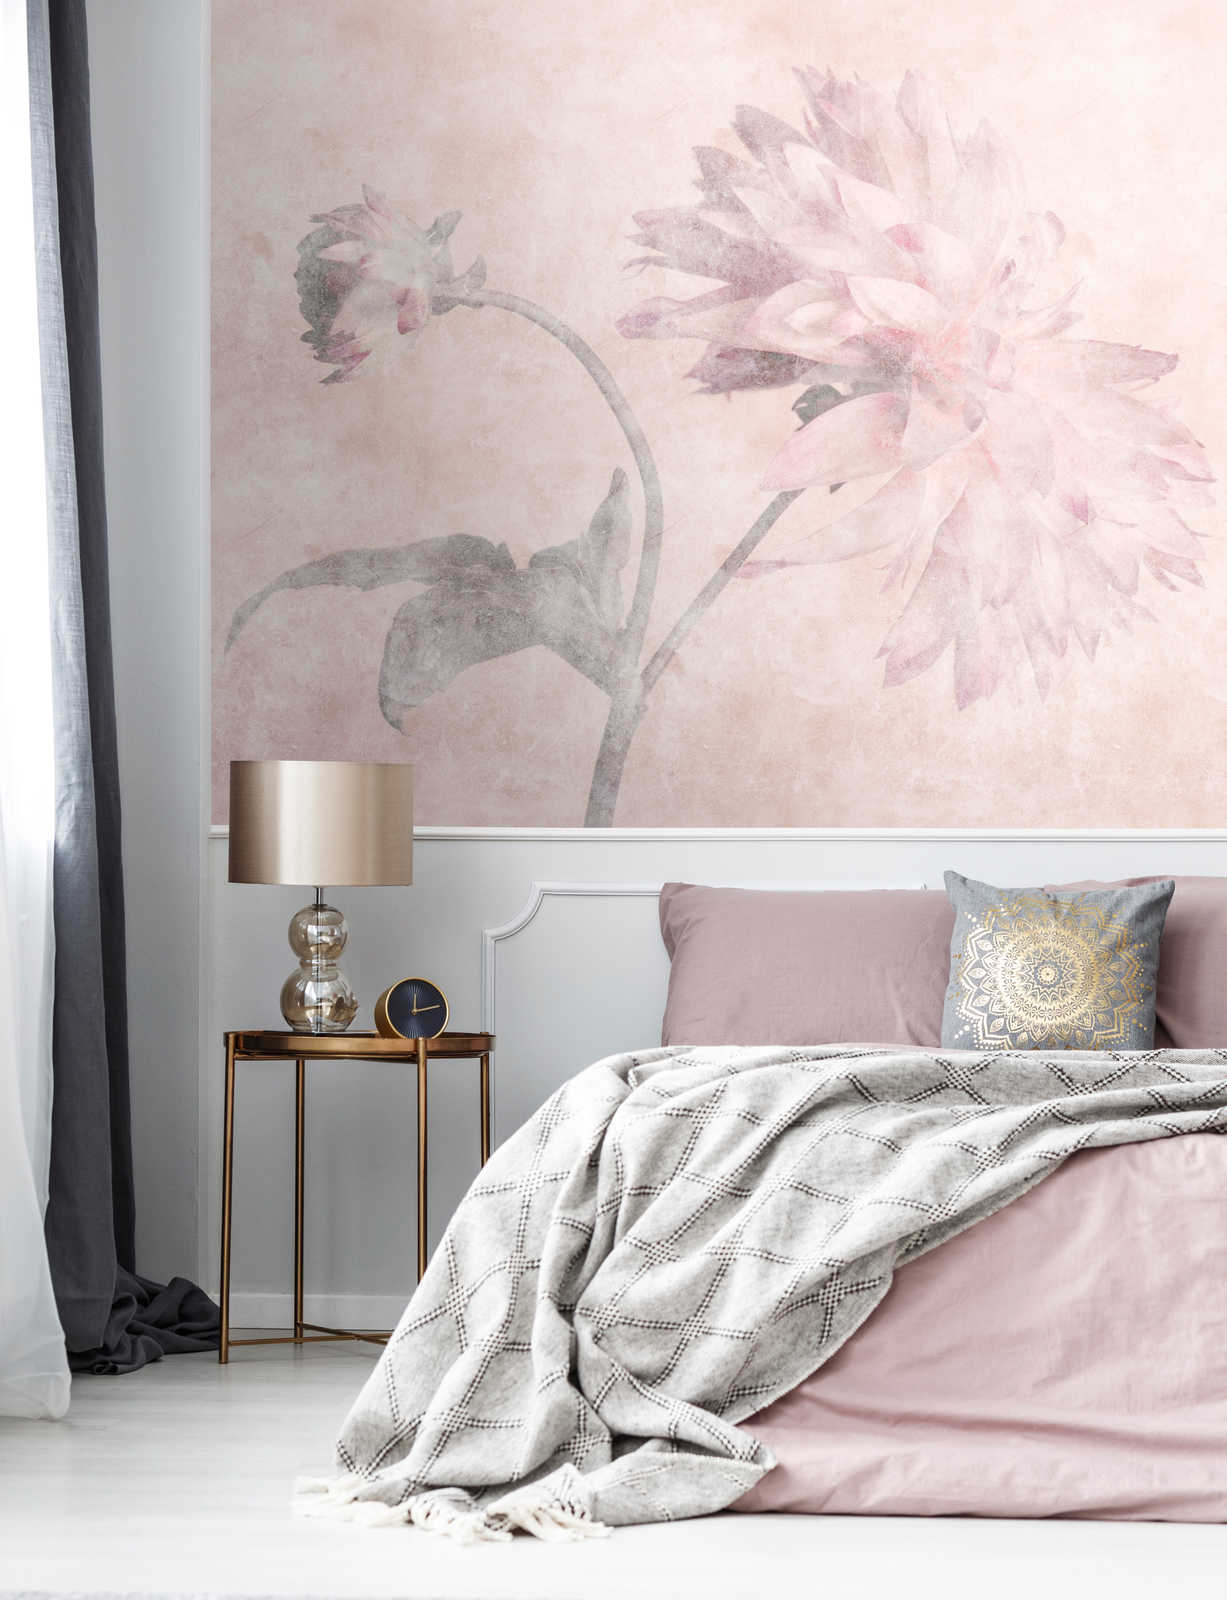             Morning Room 2 – Flower wallpaper mural dahlias in a faded fresco style
        